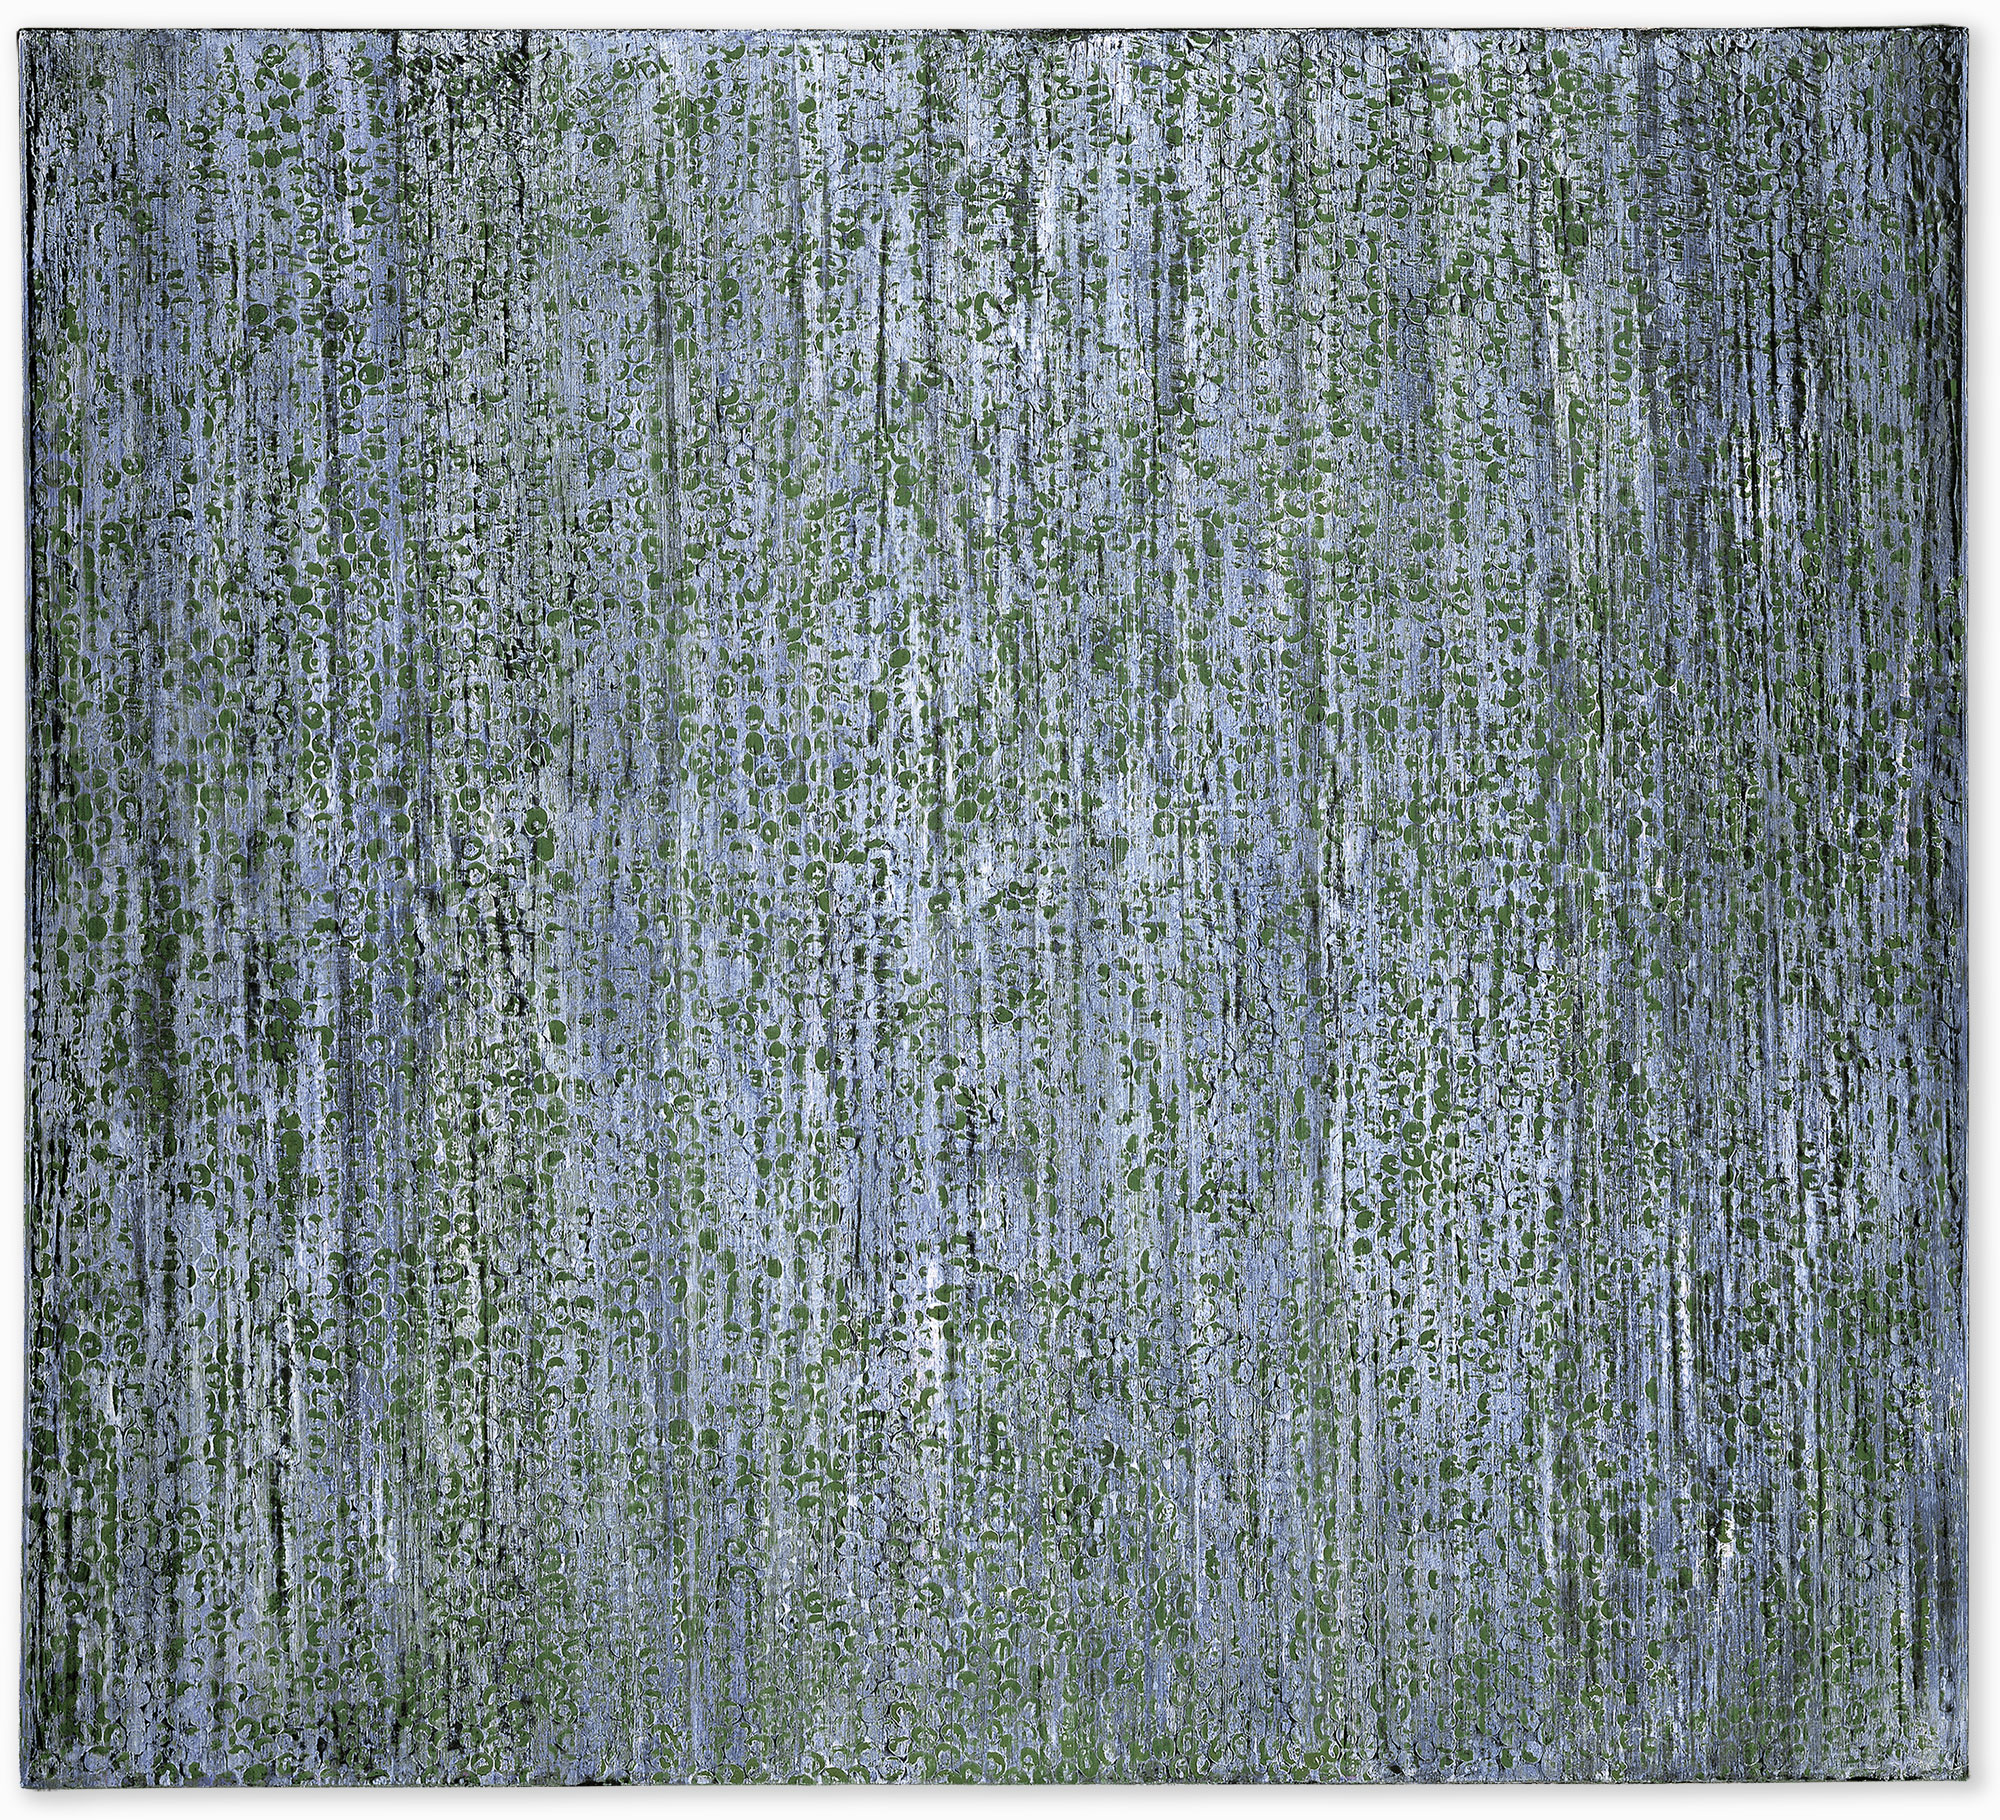 SAYAN IX / 2001, egg tempera on canvas , 200 x 220 cm